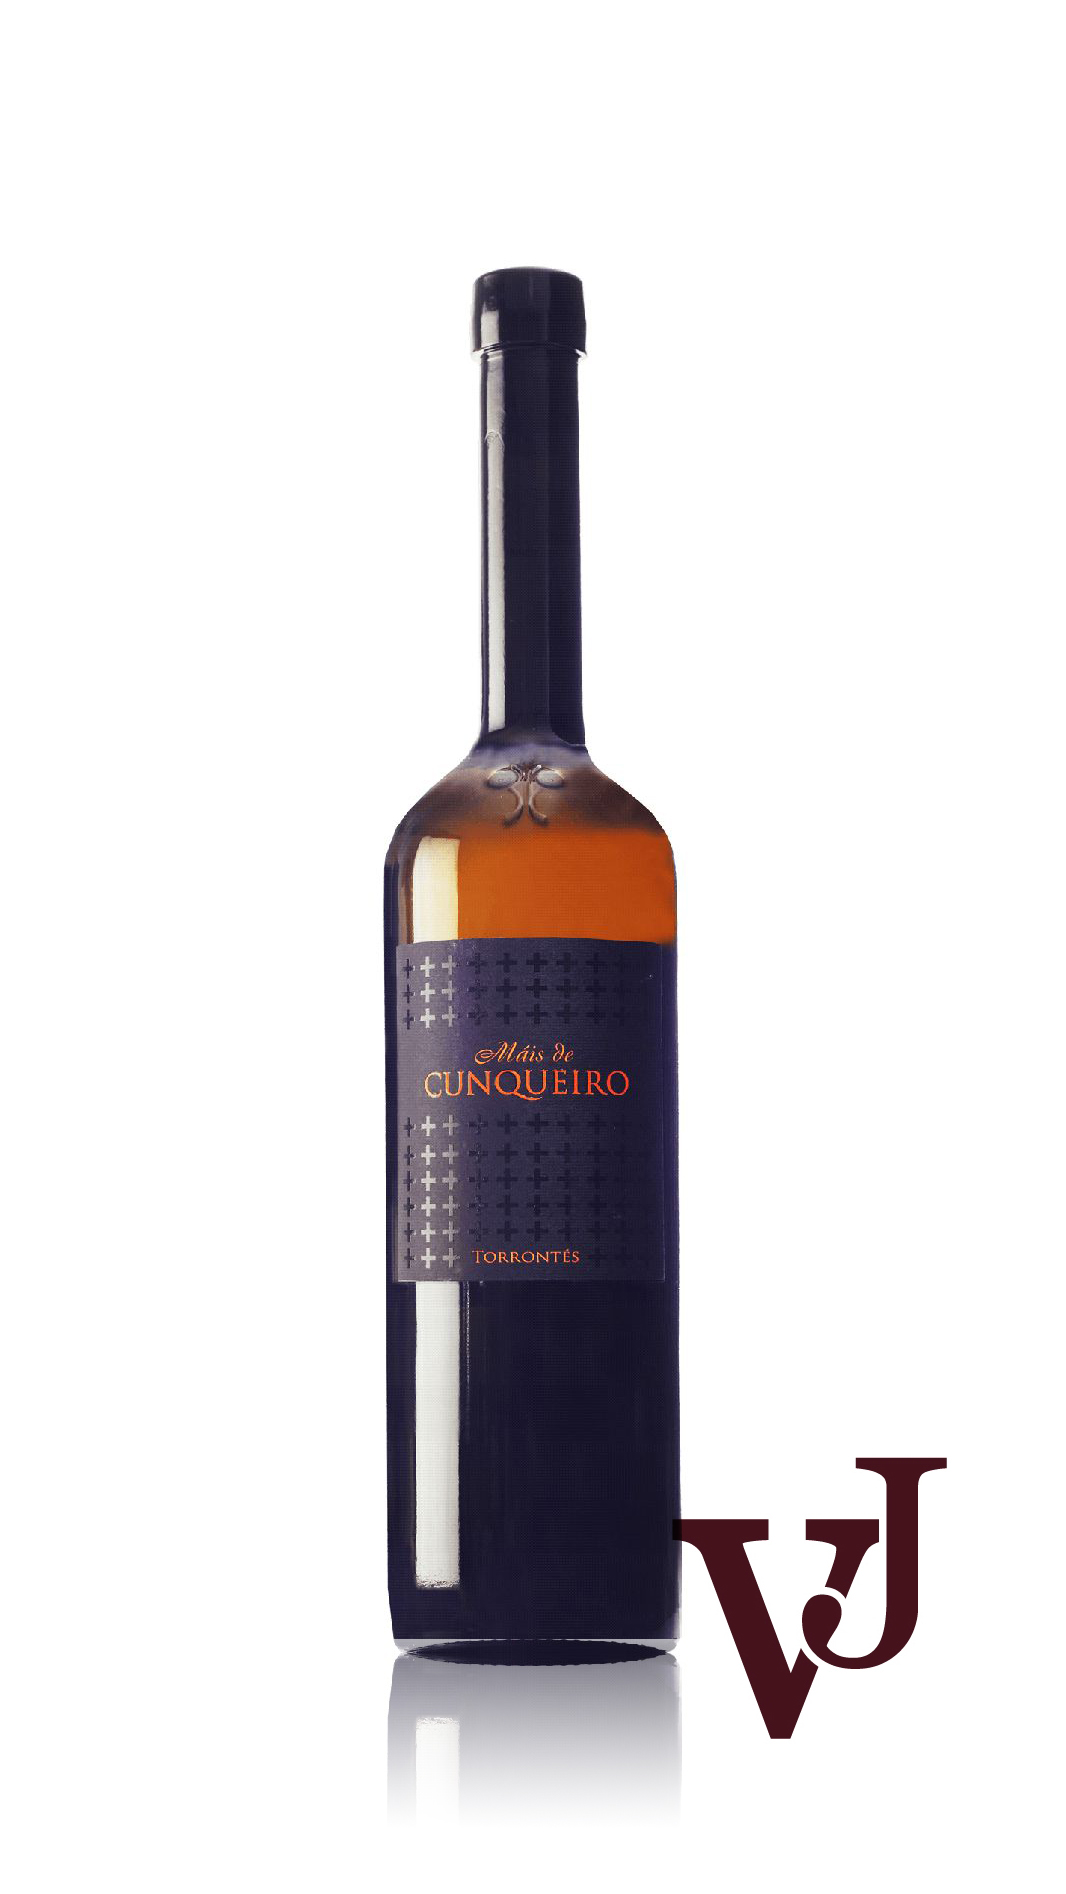 Vitt Vin - Máis de Cunqueiro 2020 artikel nummer 5530801 från producenten Bodegas Cunqueiro från området Spanien